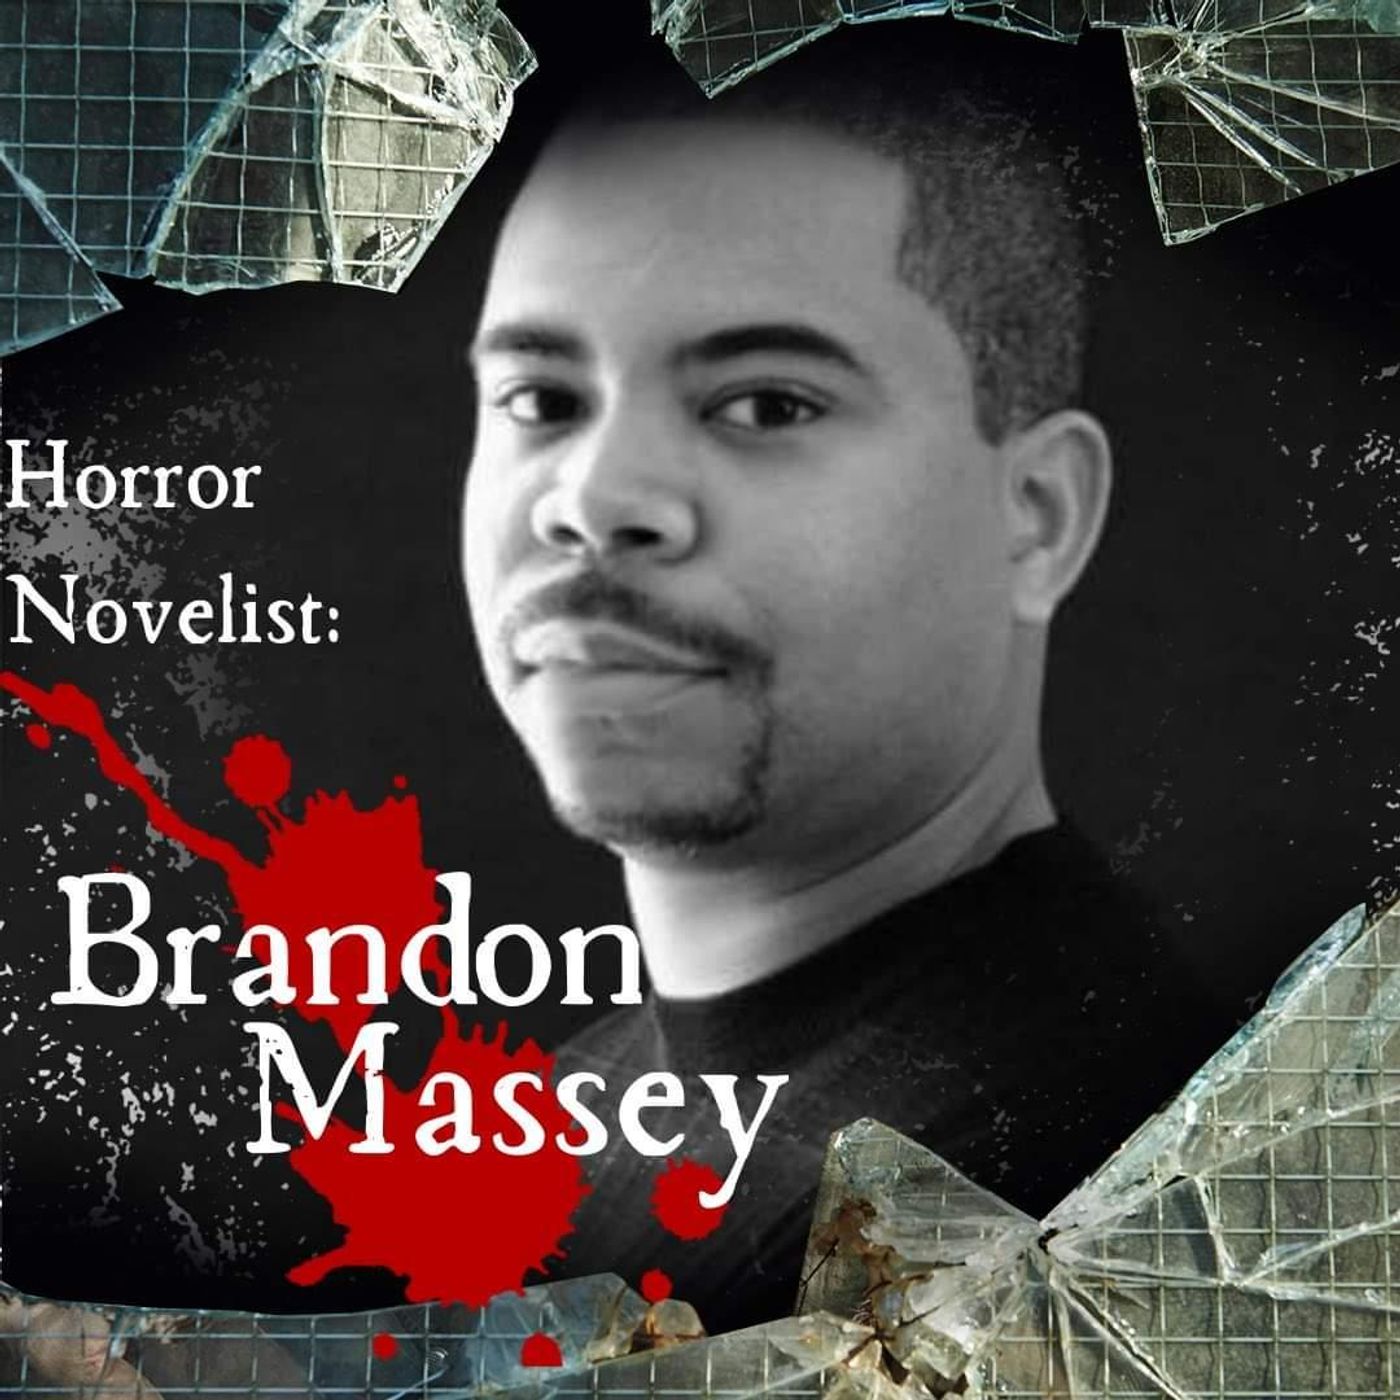 Dark Corner : Exploring Horror Narratives through a Black Lens W/ Brandon Massey